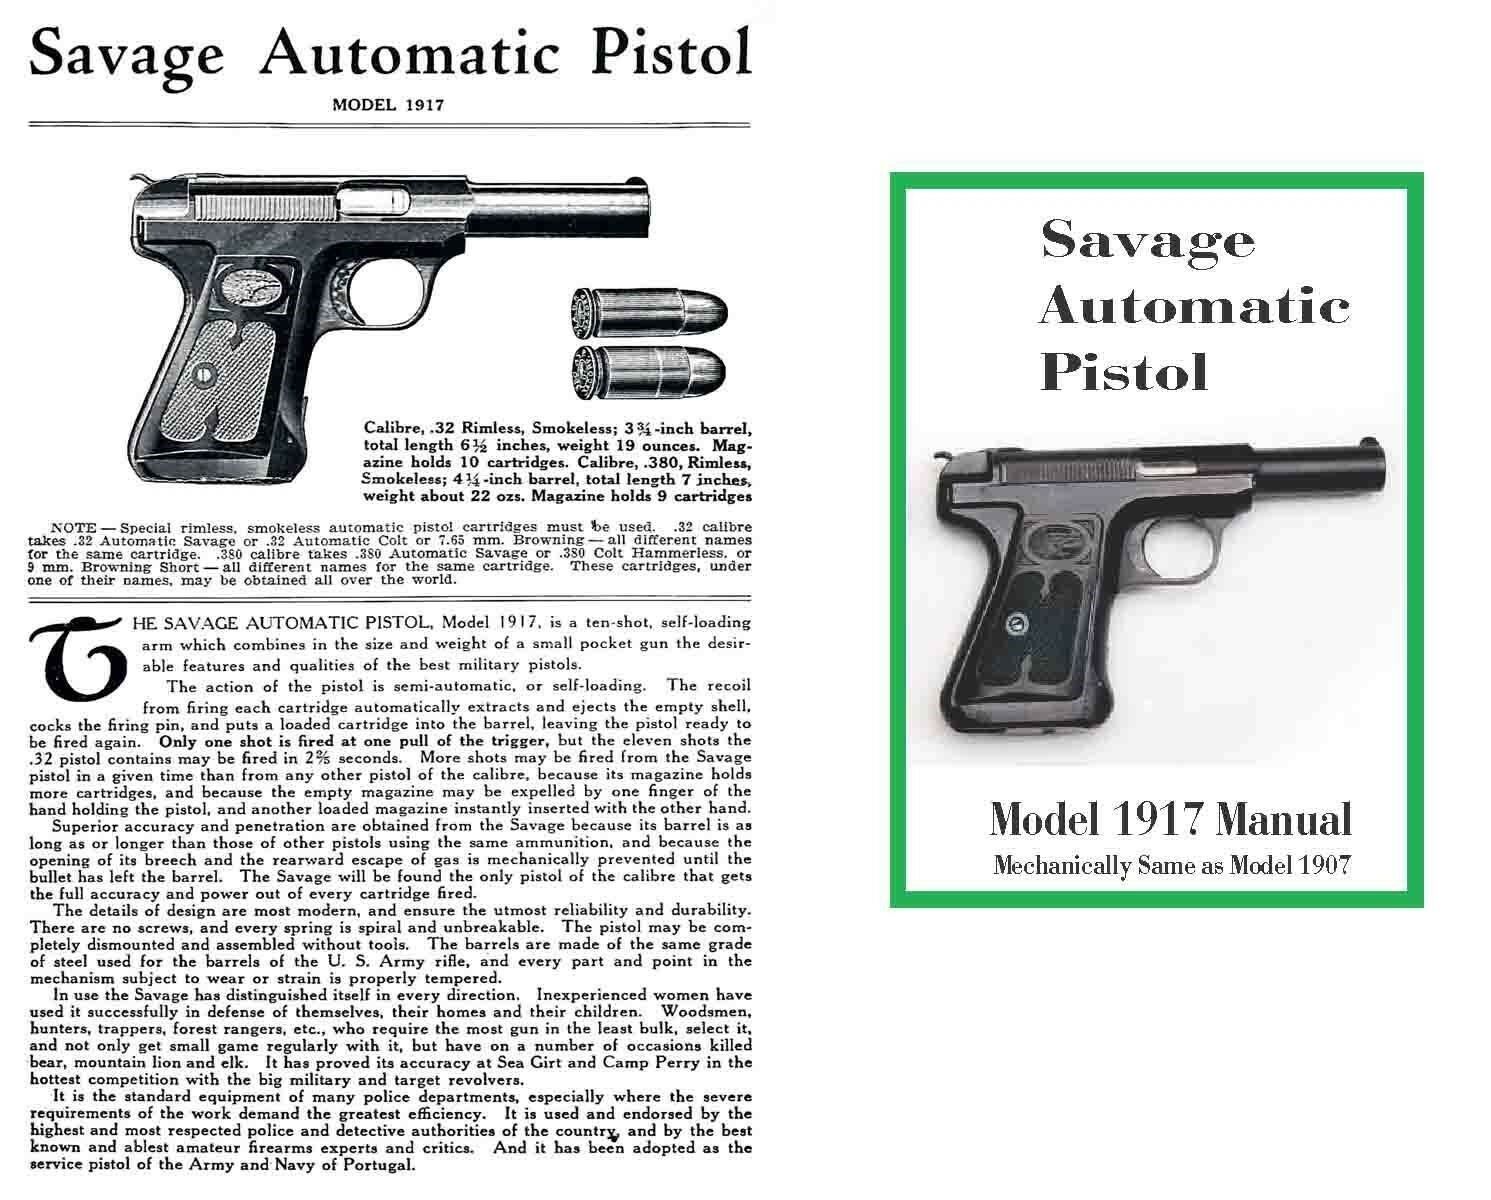 Savage Model 1907/1917 Automatic Pistol Manual